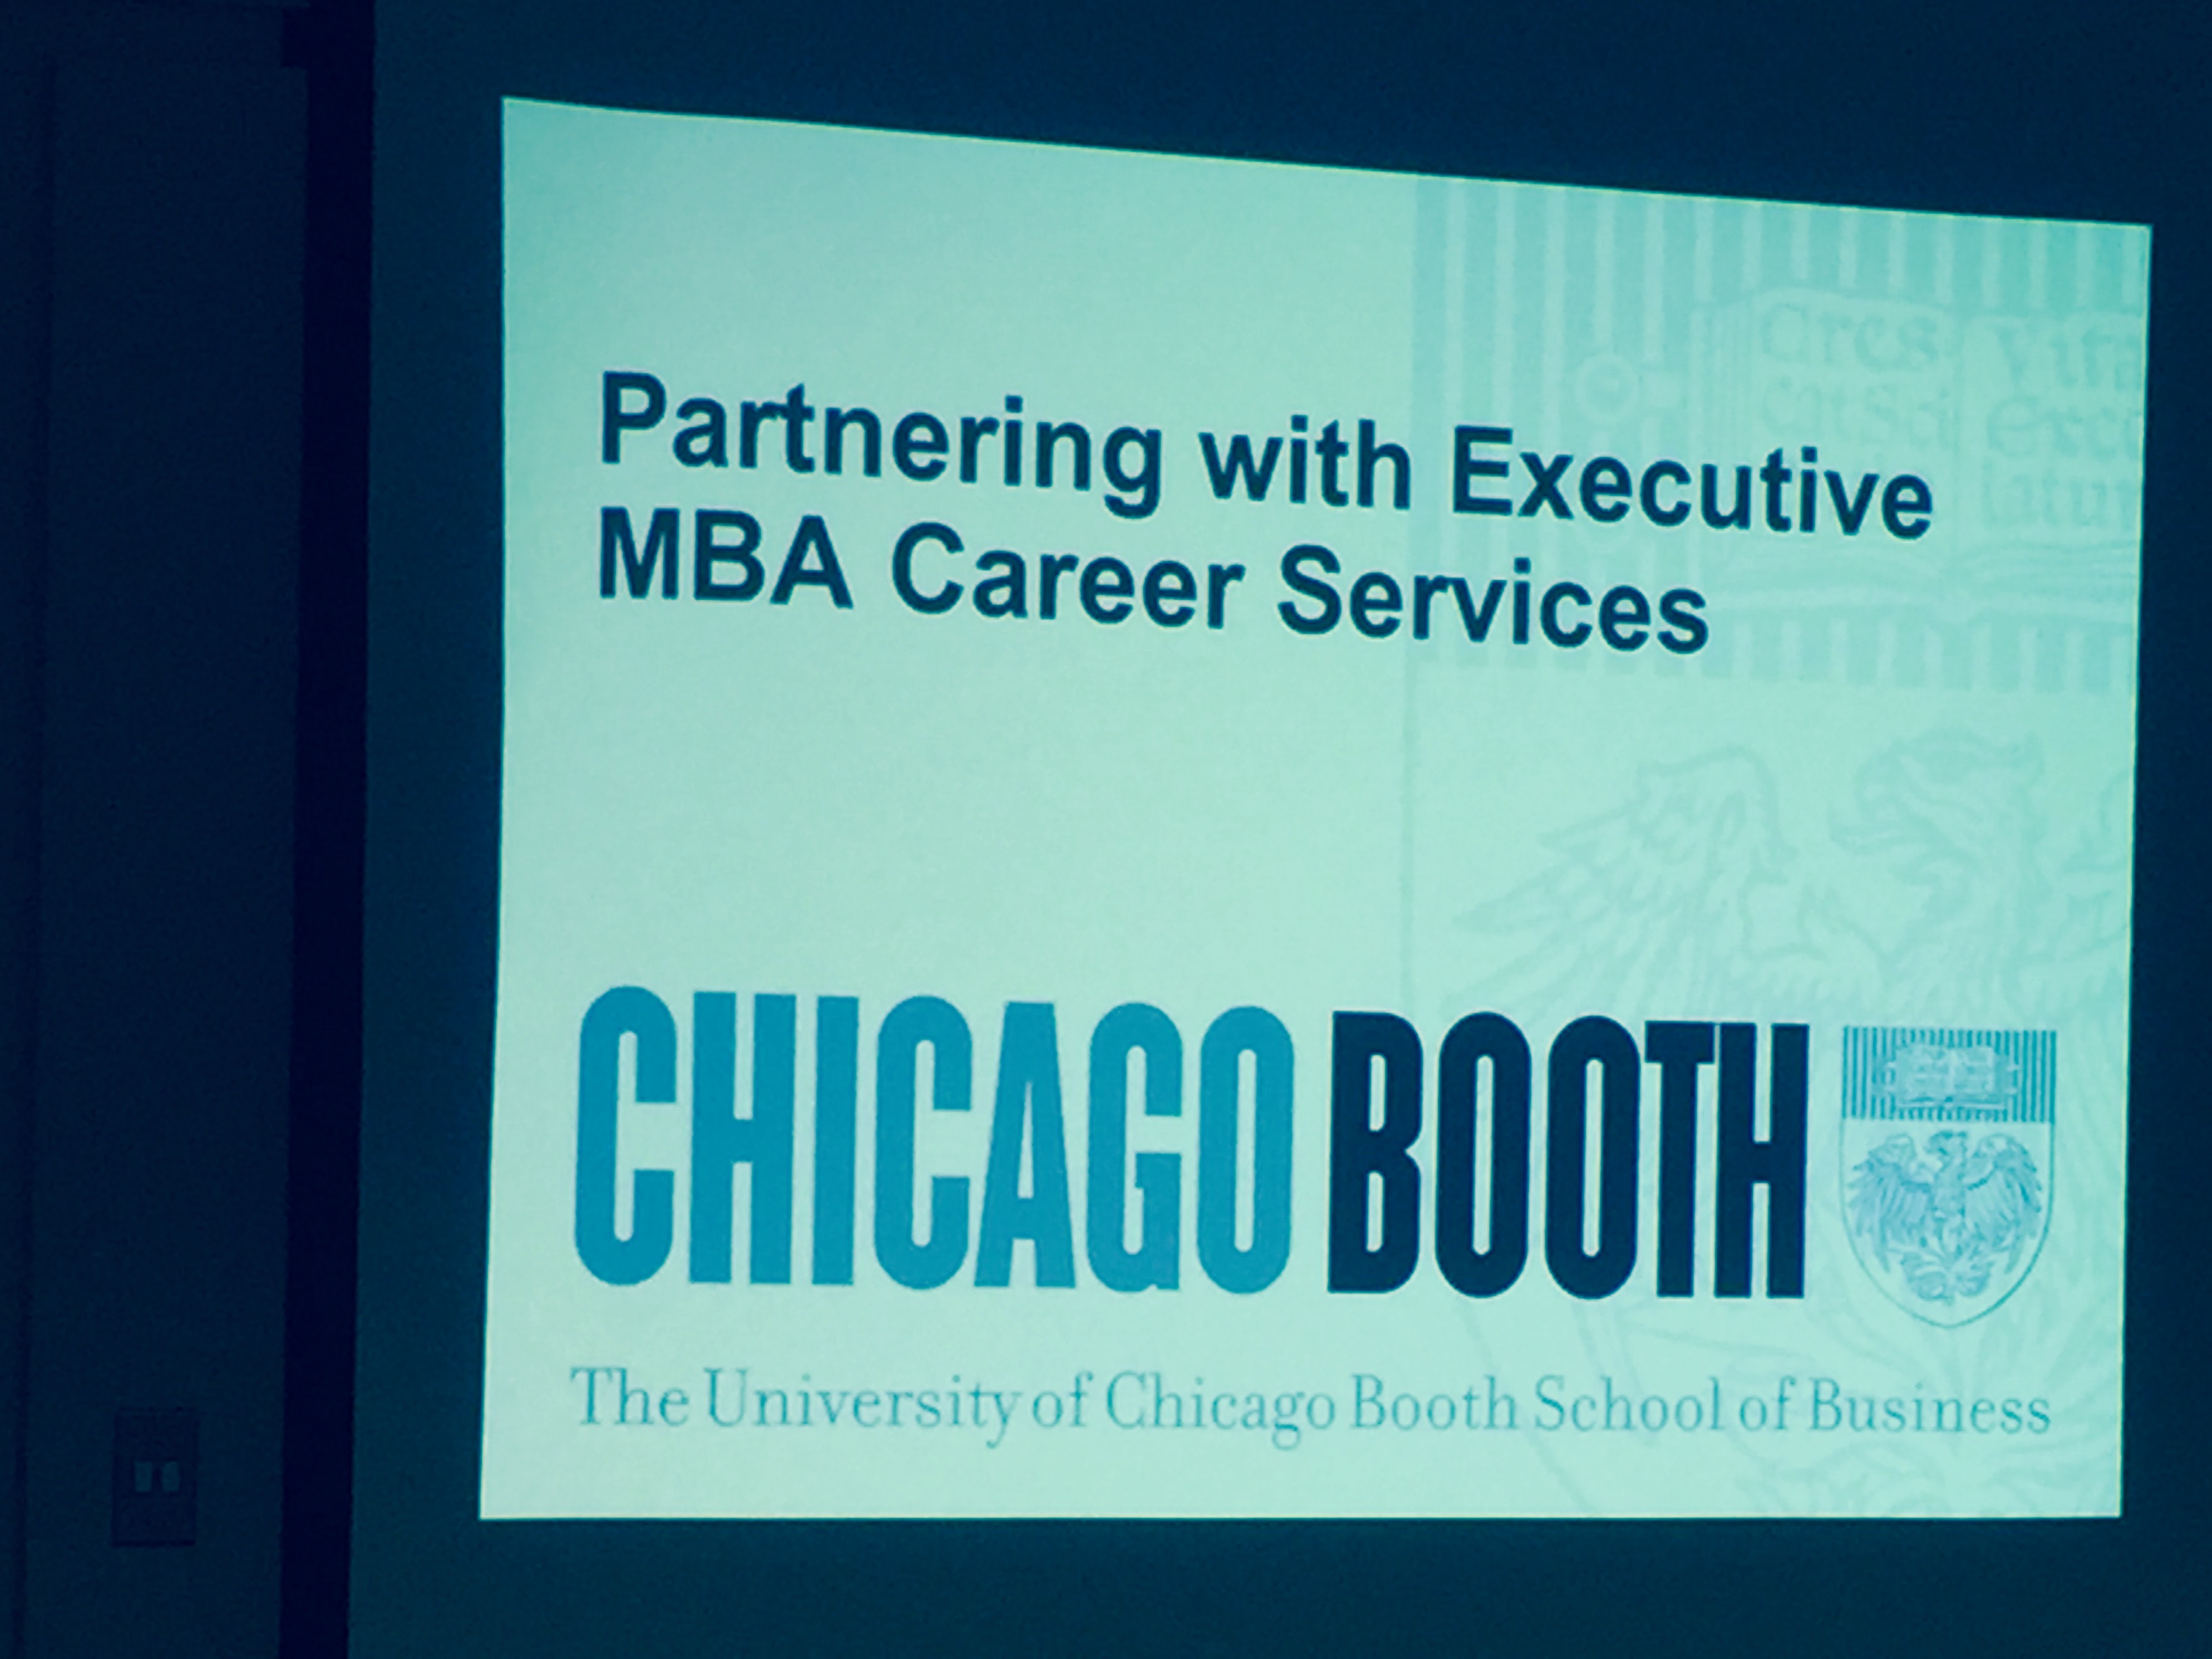 University of Chicago Executive MBA Program Fourstar Wealth Advisors